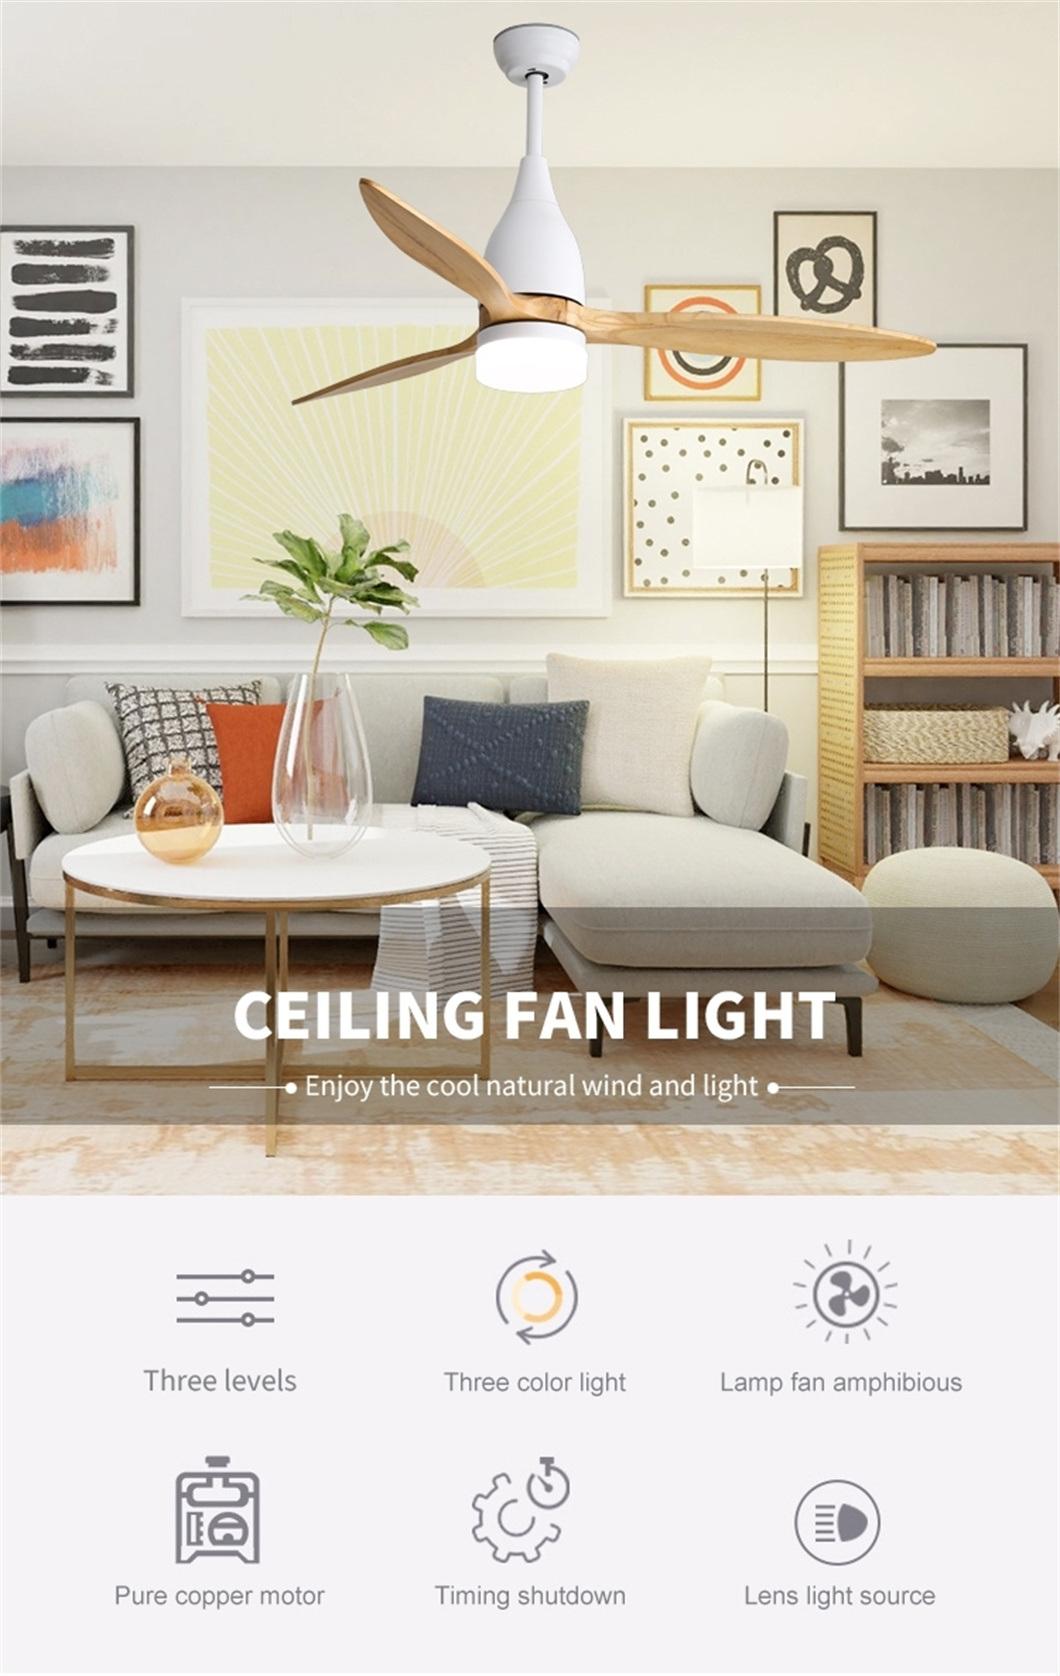 Smart Home Remote Control 3 Fan Speed 3 Blades Wood Bedroom Ceiling Fan LED Lighting